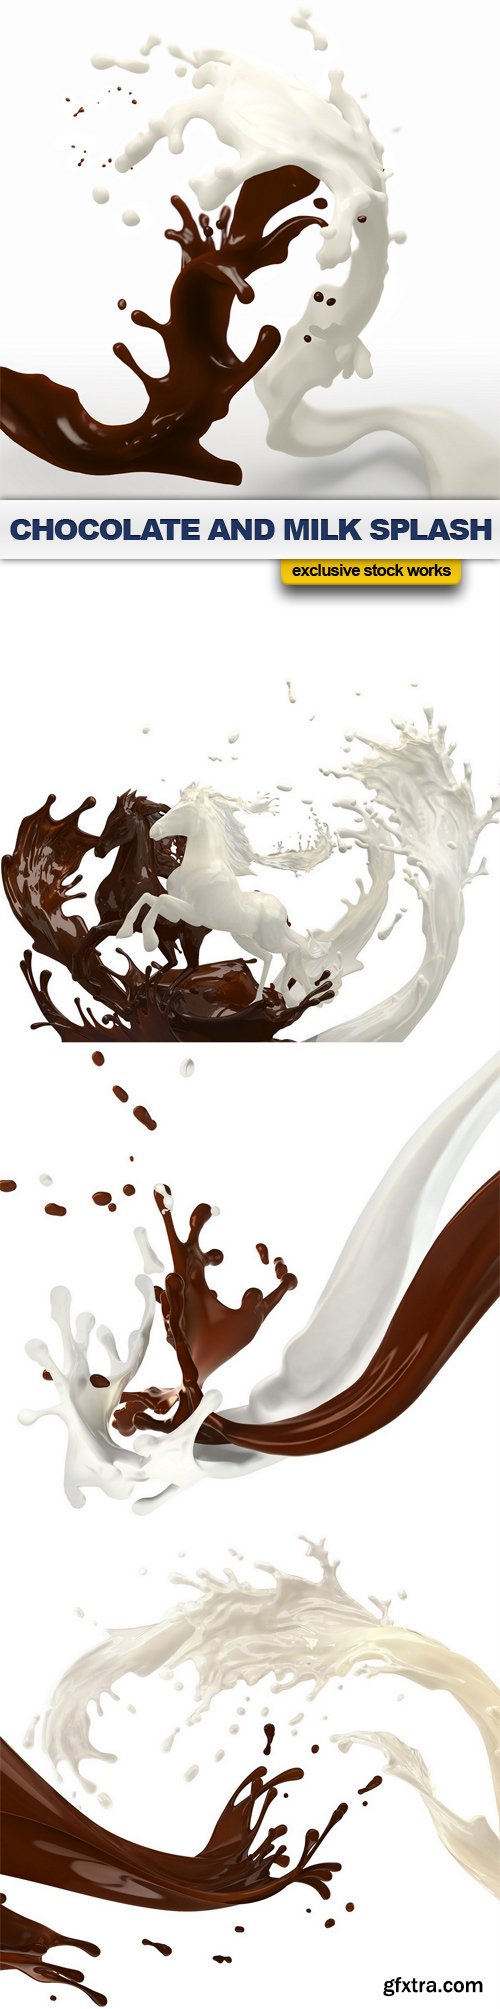 Chocolate and Milk Splash - 4 UHQ JPEG